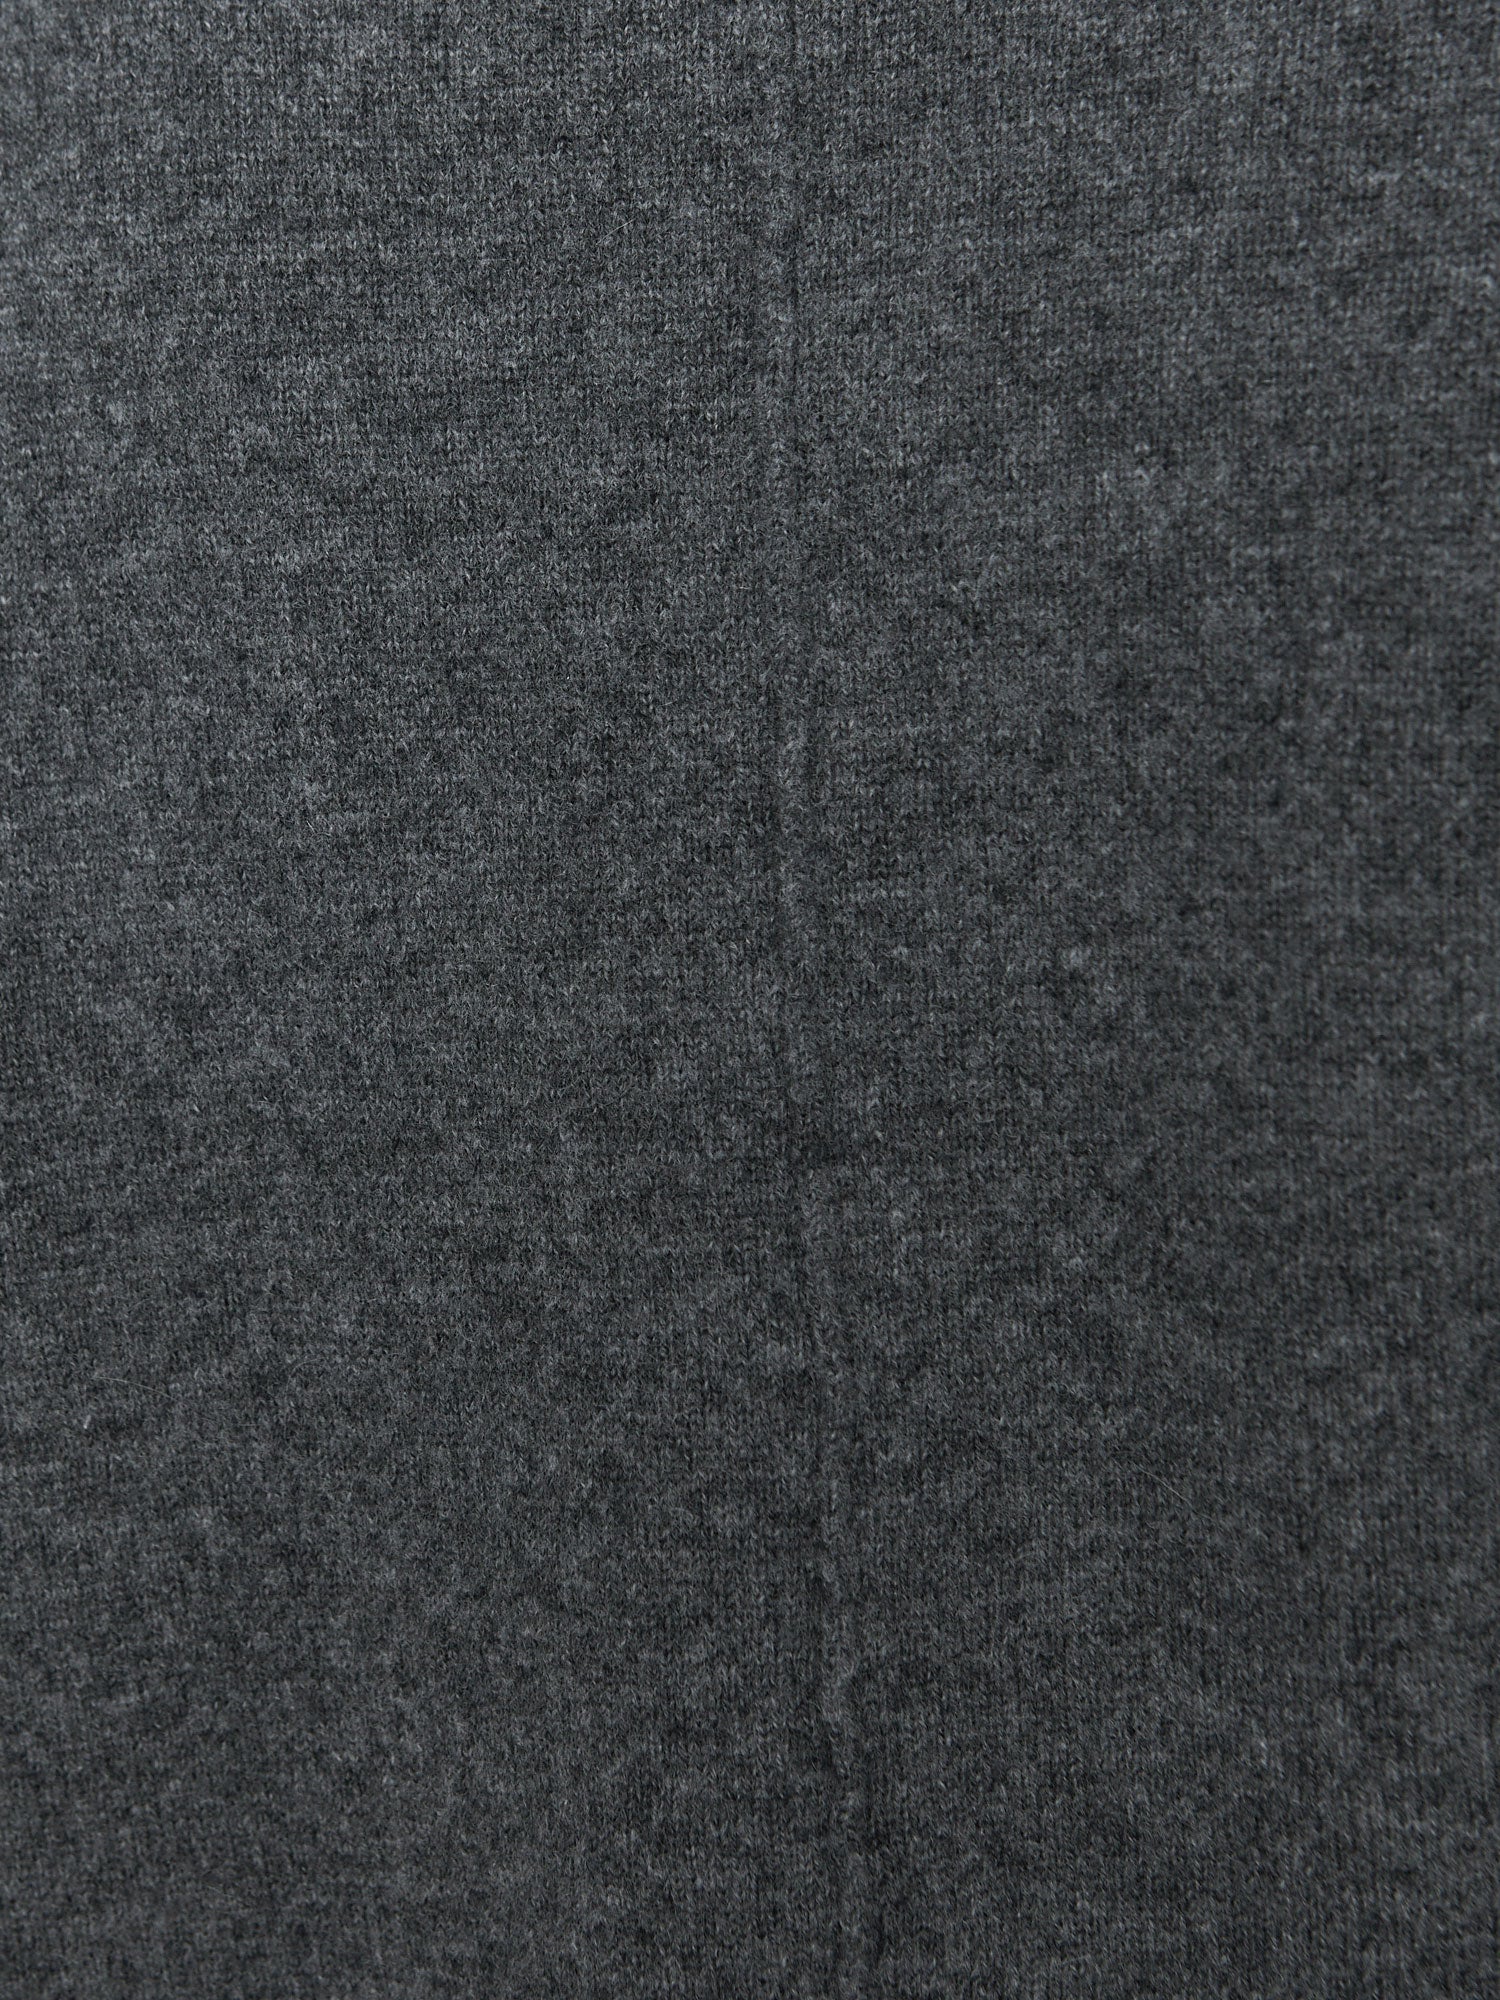 Halo dark grey cashmere wool cardigan sweater close up 2